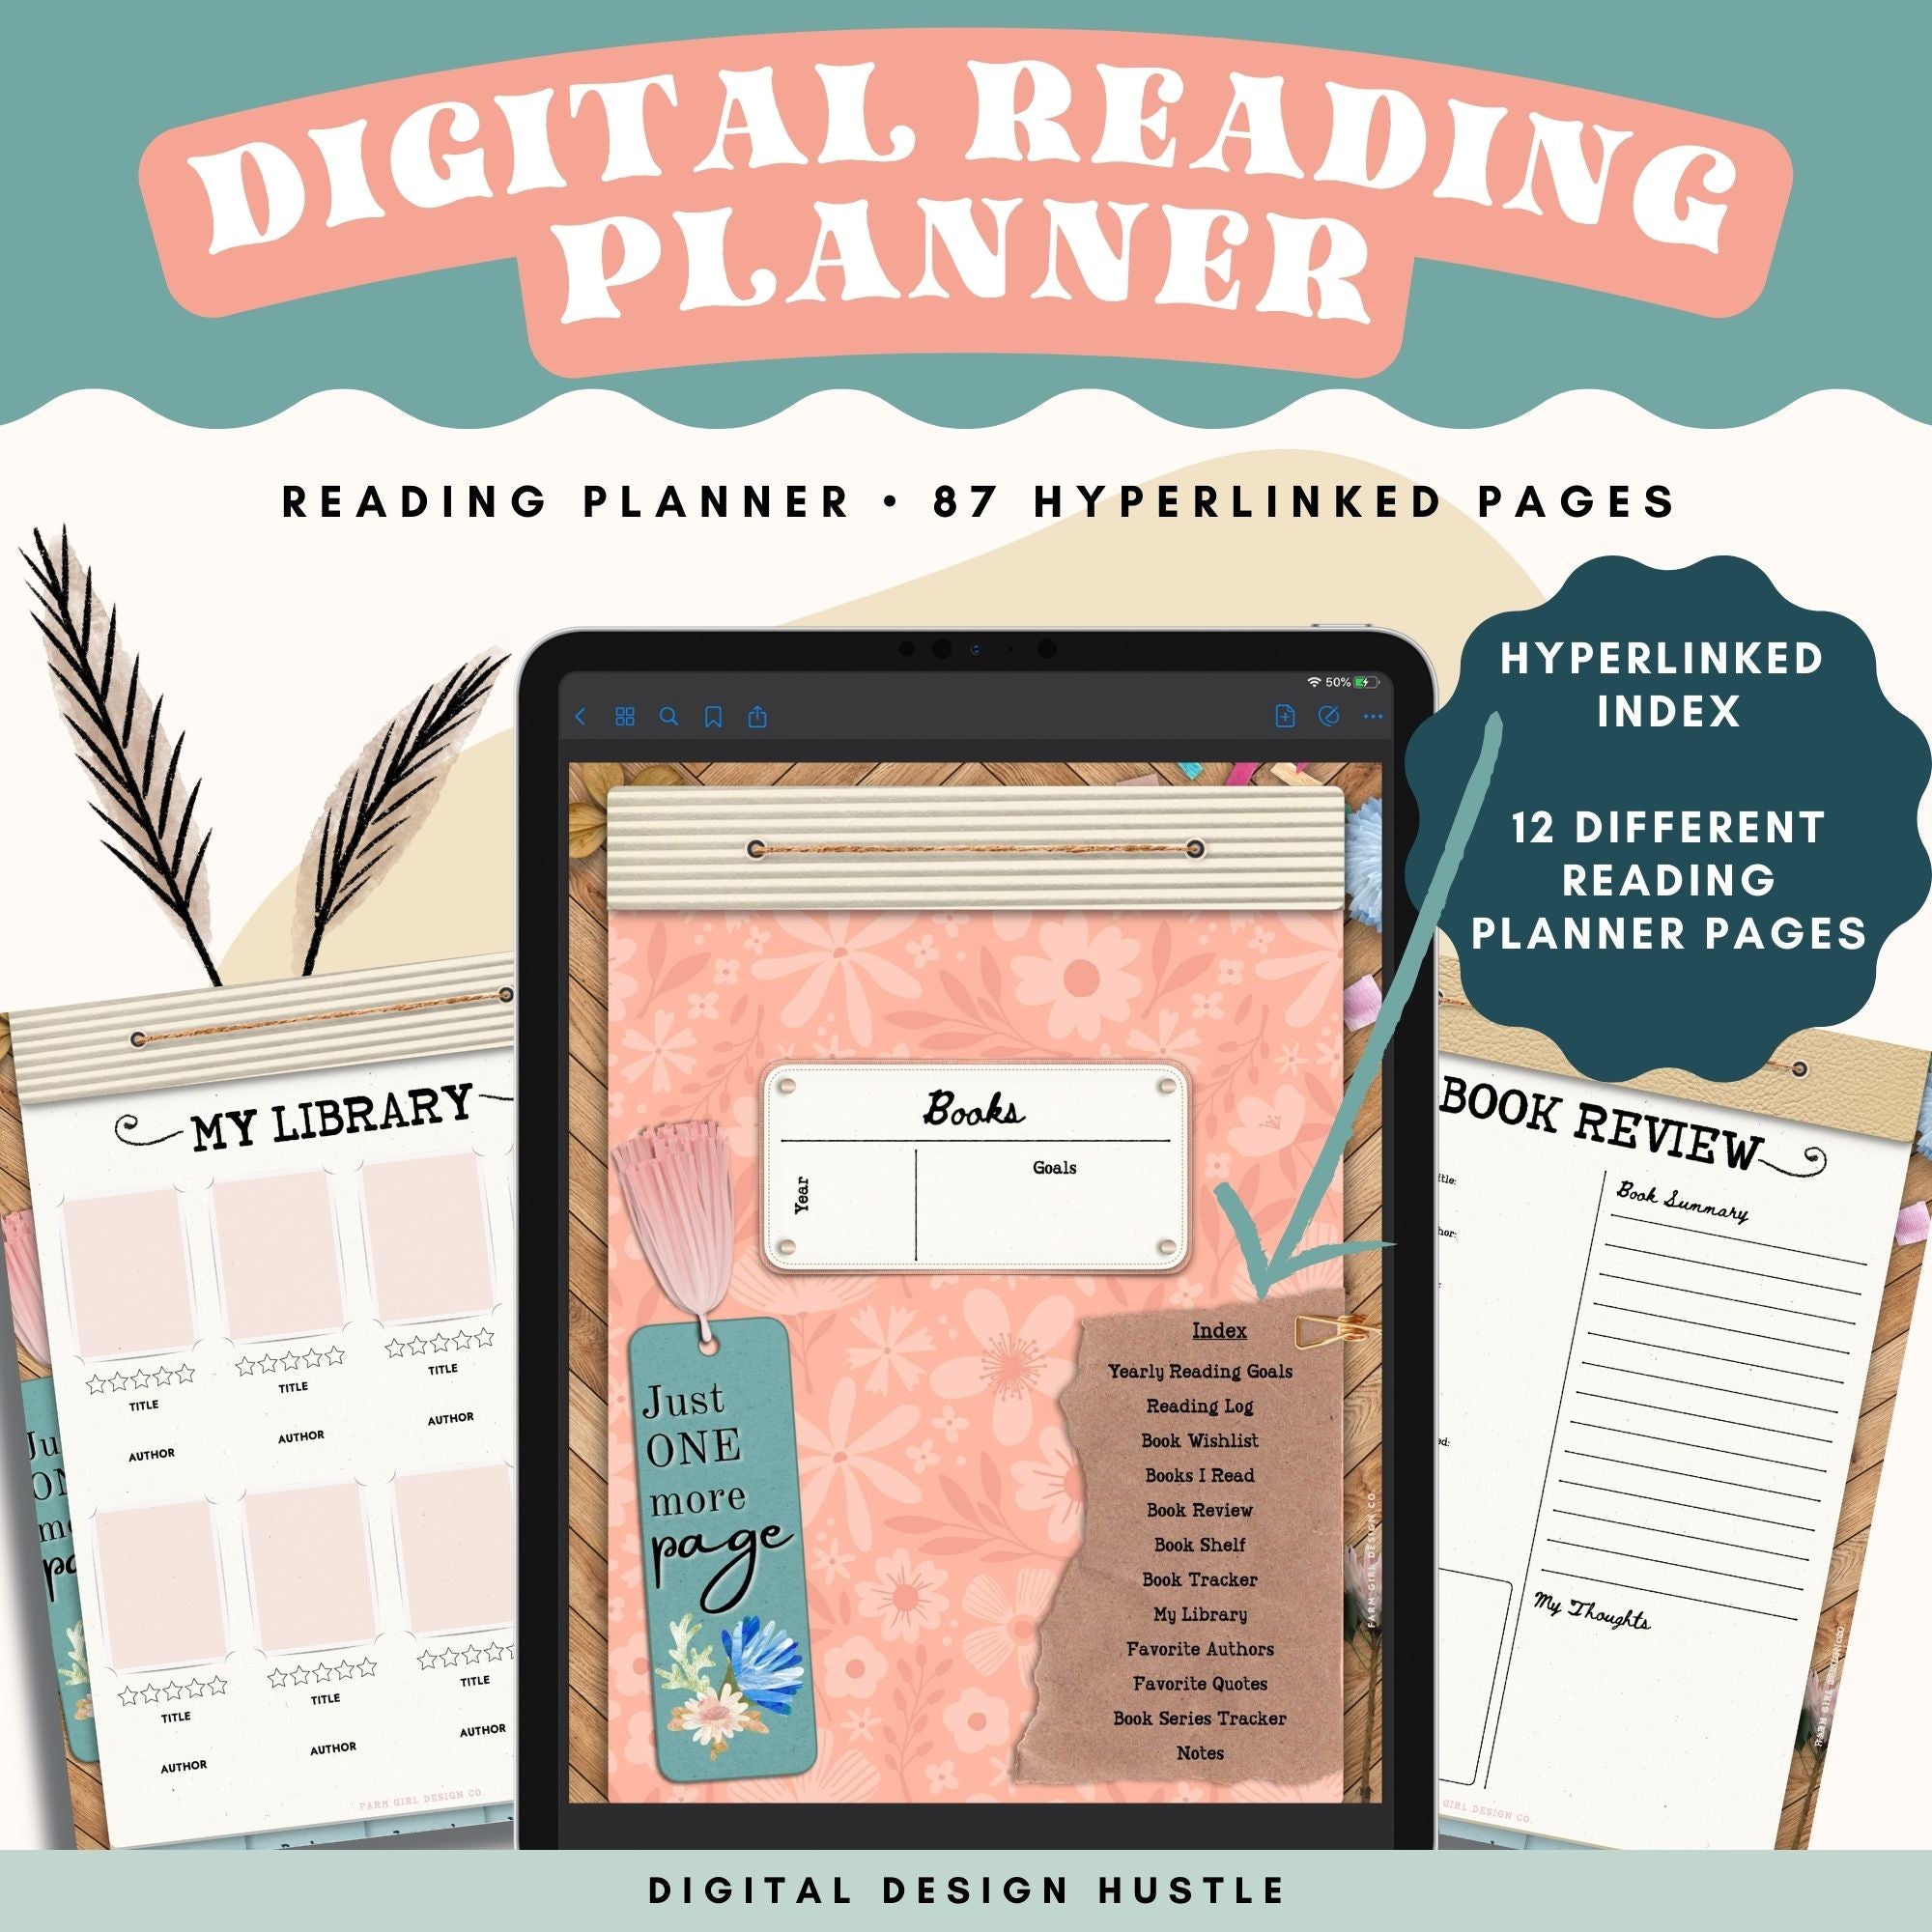 Digital Reading Journal, Digital Planner